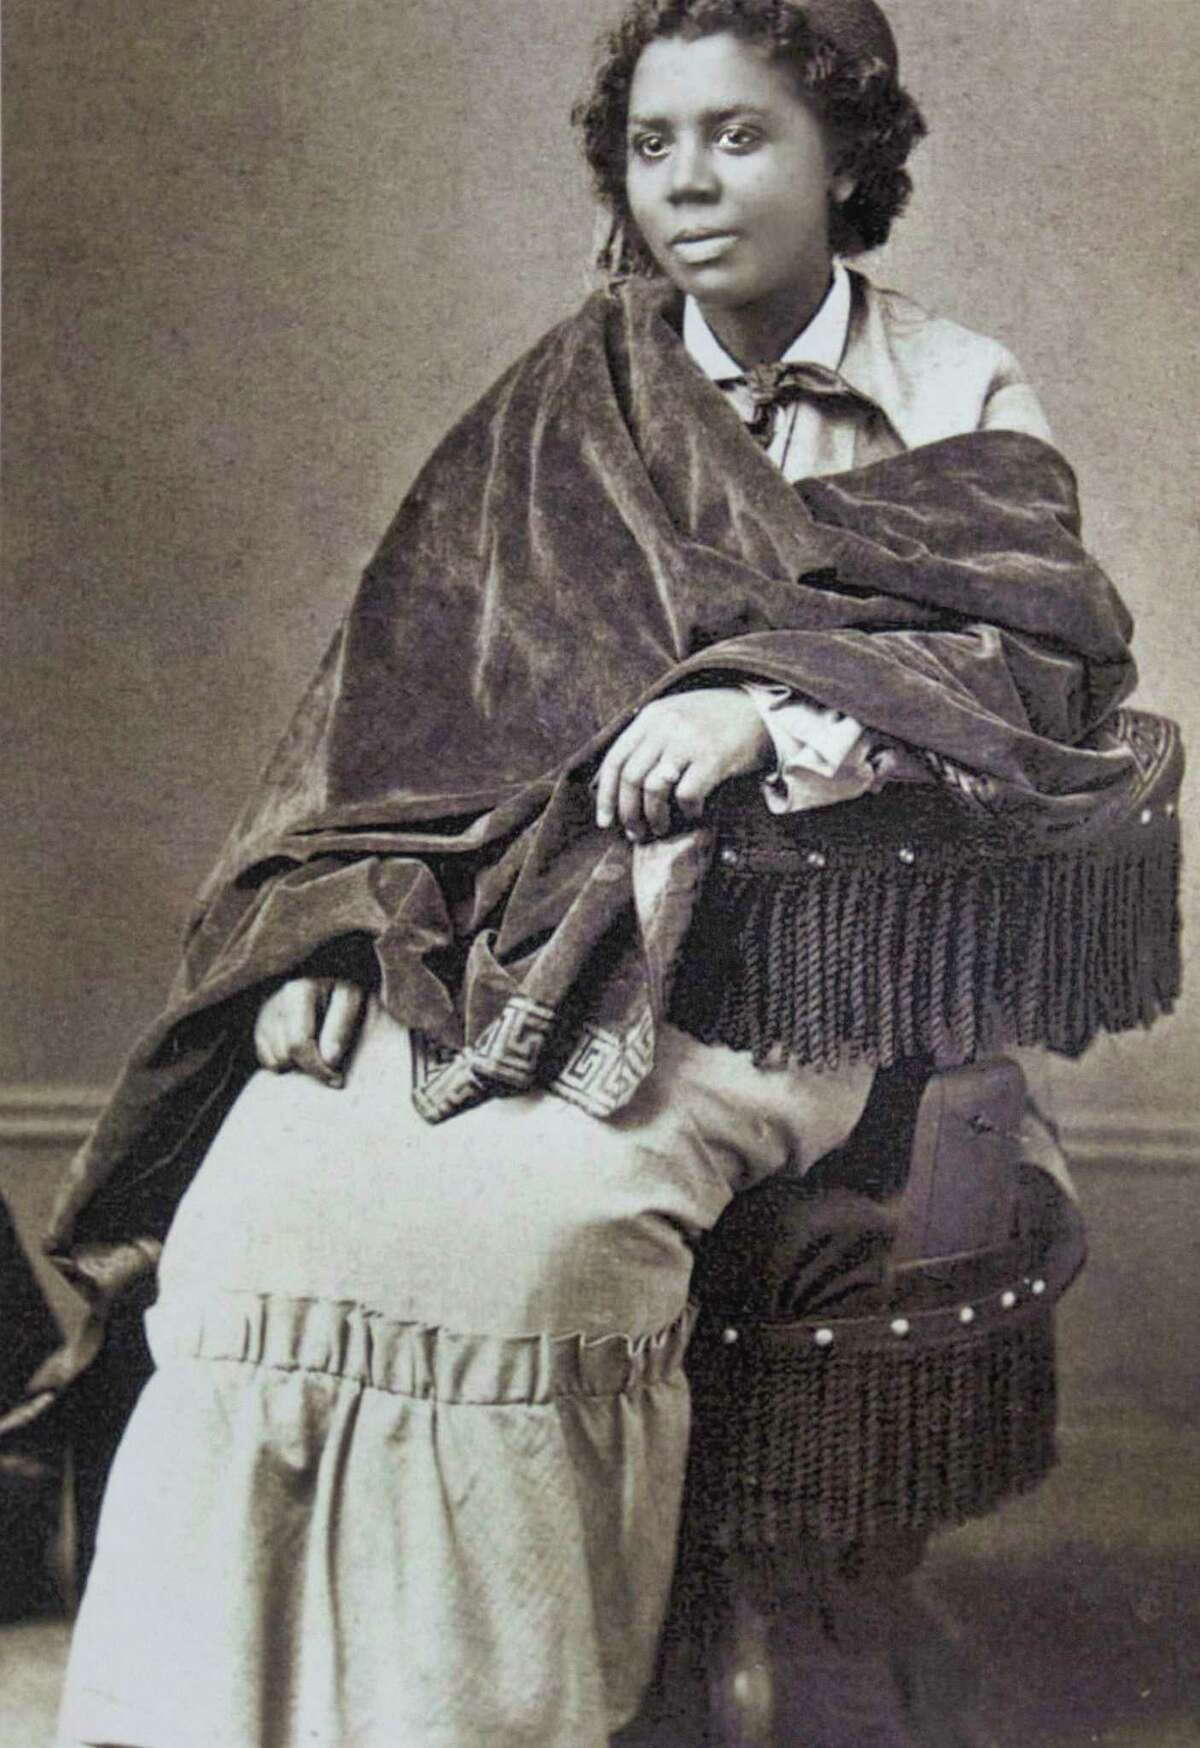 A copy photo of 19th century sculptor Edmonia Lewis.